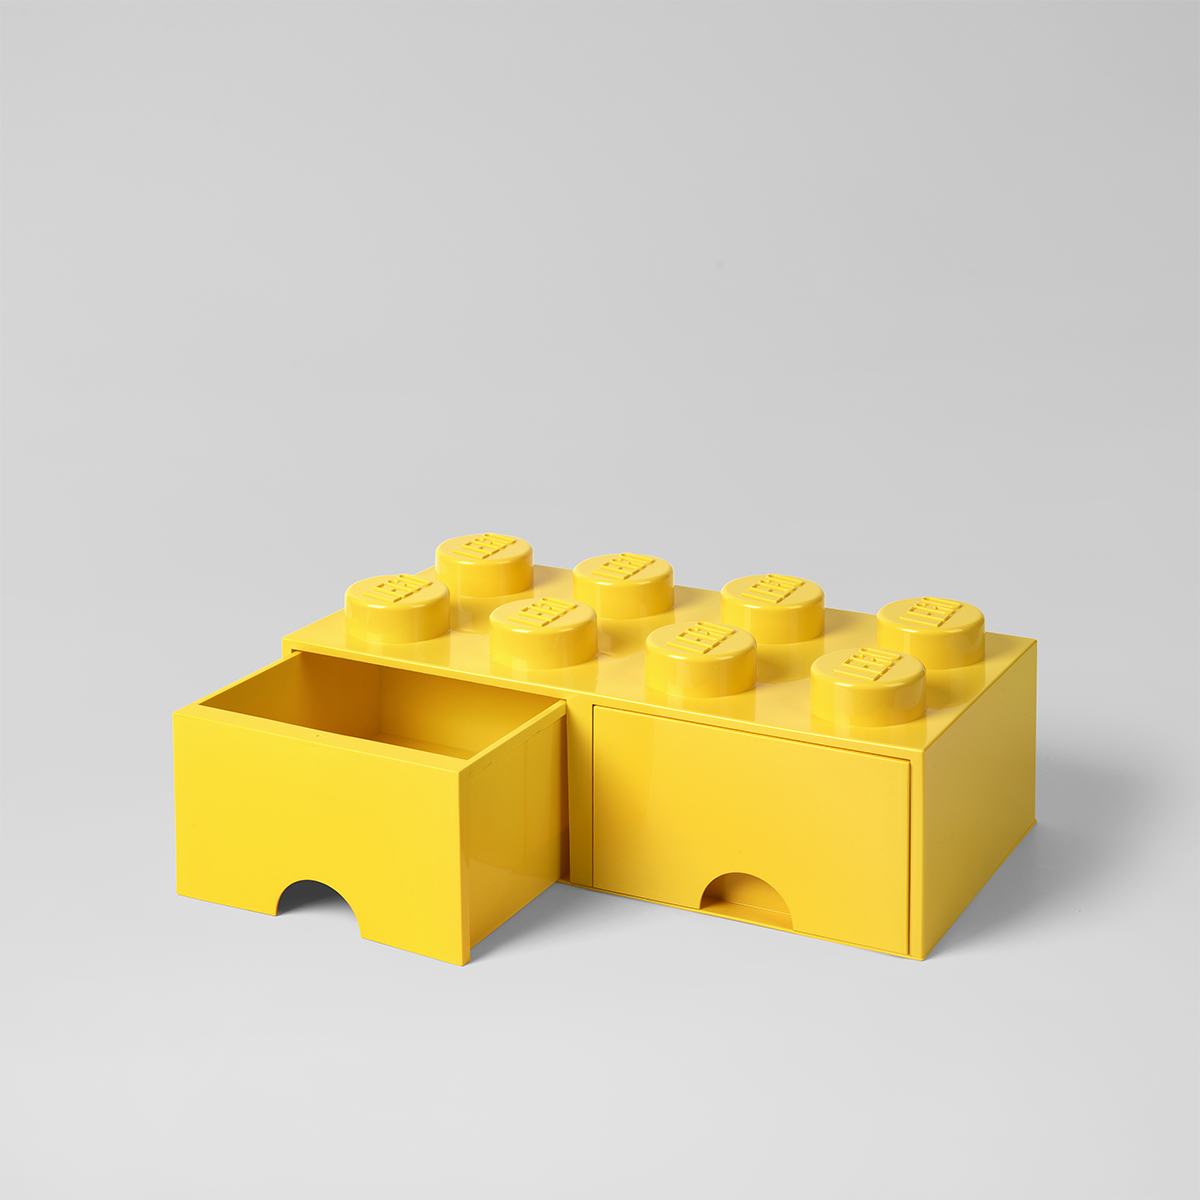 ROOM Copenhagen, Lego Sorting Box - Brick Storage with Organizing Dividers  - Iconic Blue